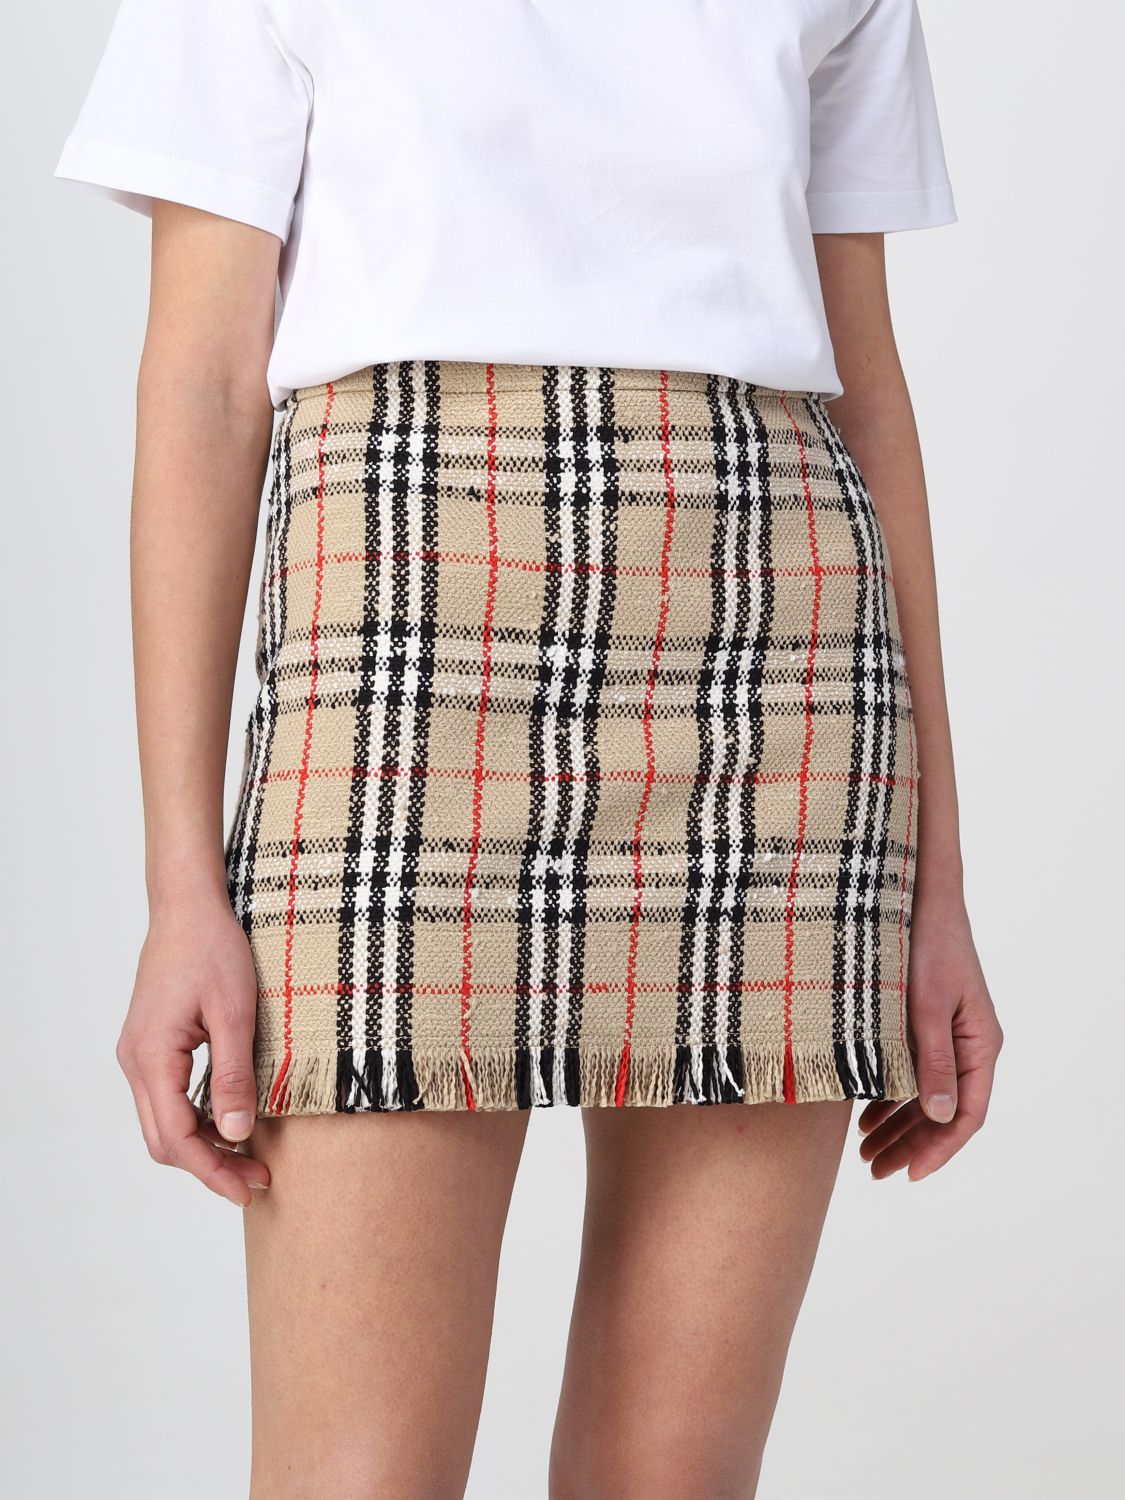 Burberry Skirt For Woman Beige Burberry Skirt 8063228 Online On Gigliocom 